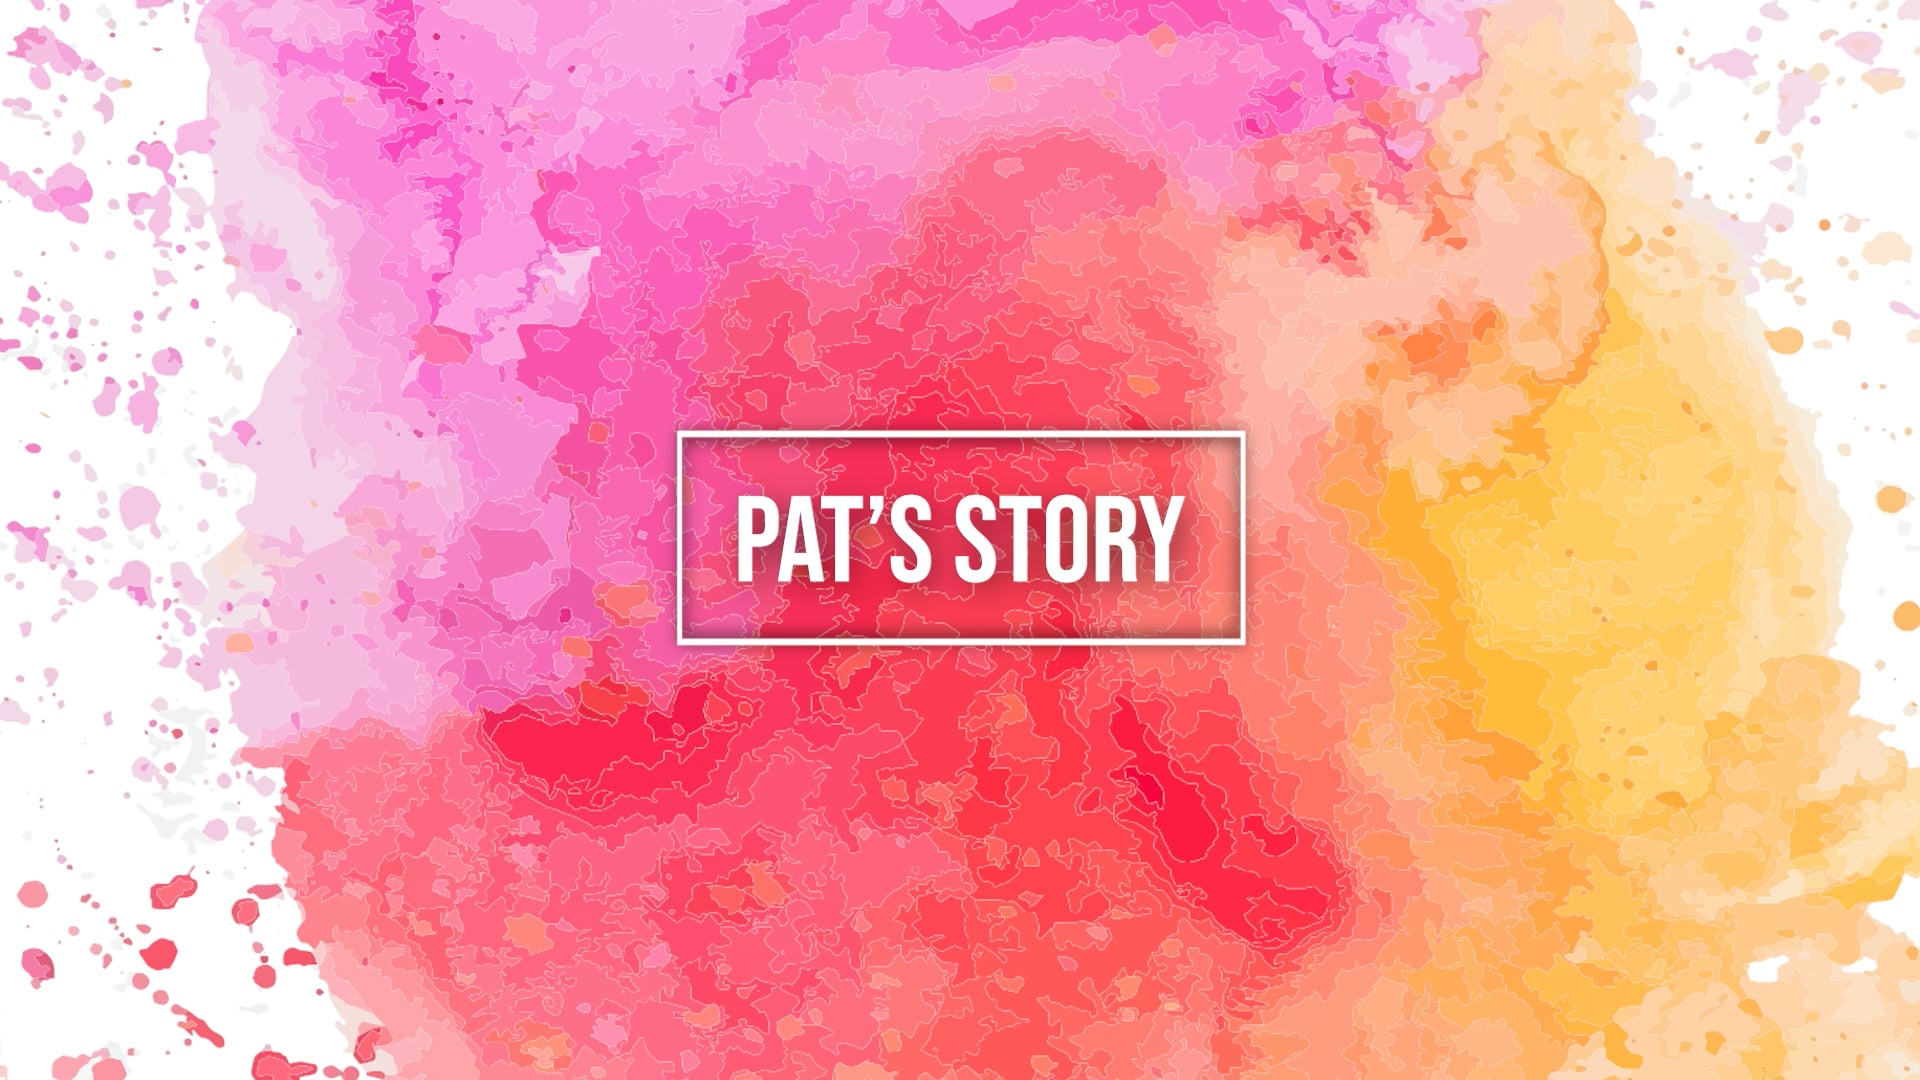 Pat's Story